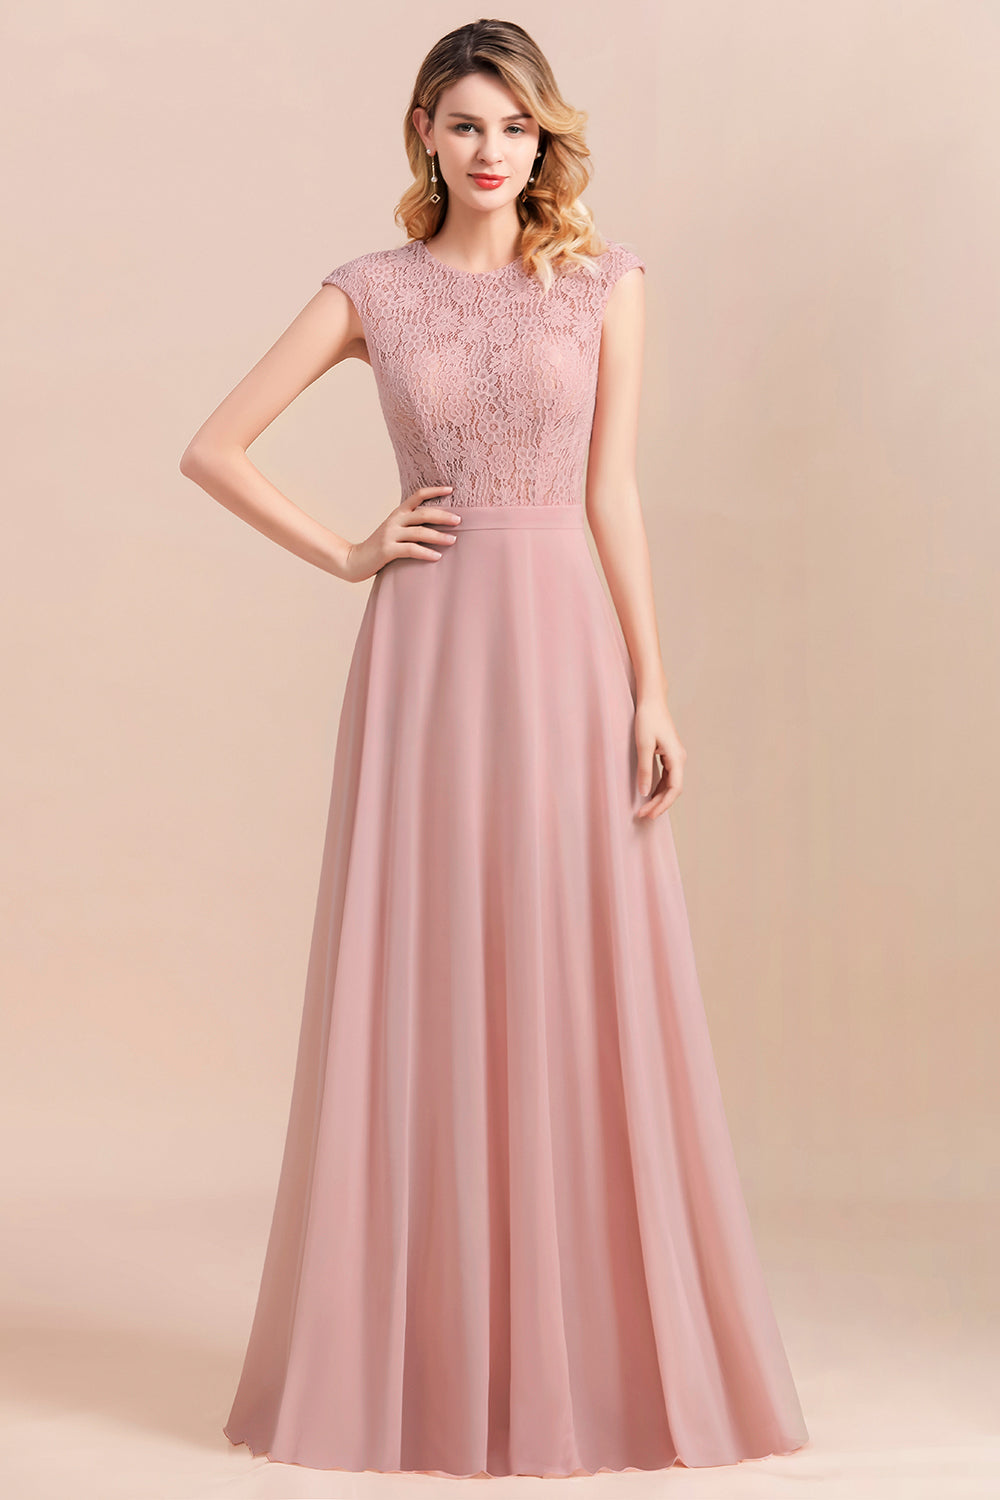 Classy Long A-Line Evening Dress Chiffon Bridesmaid Dress with Lace-BIZTUNNEL